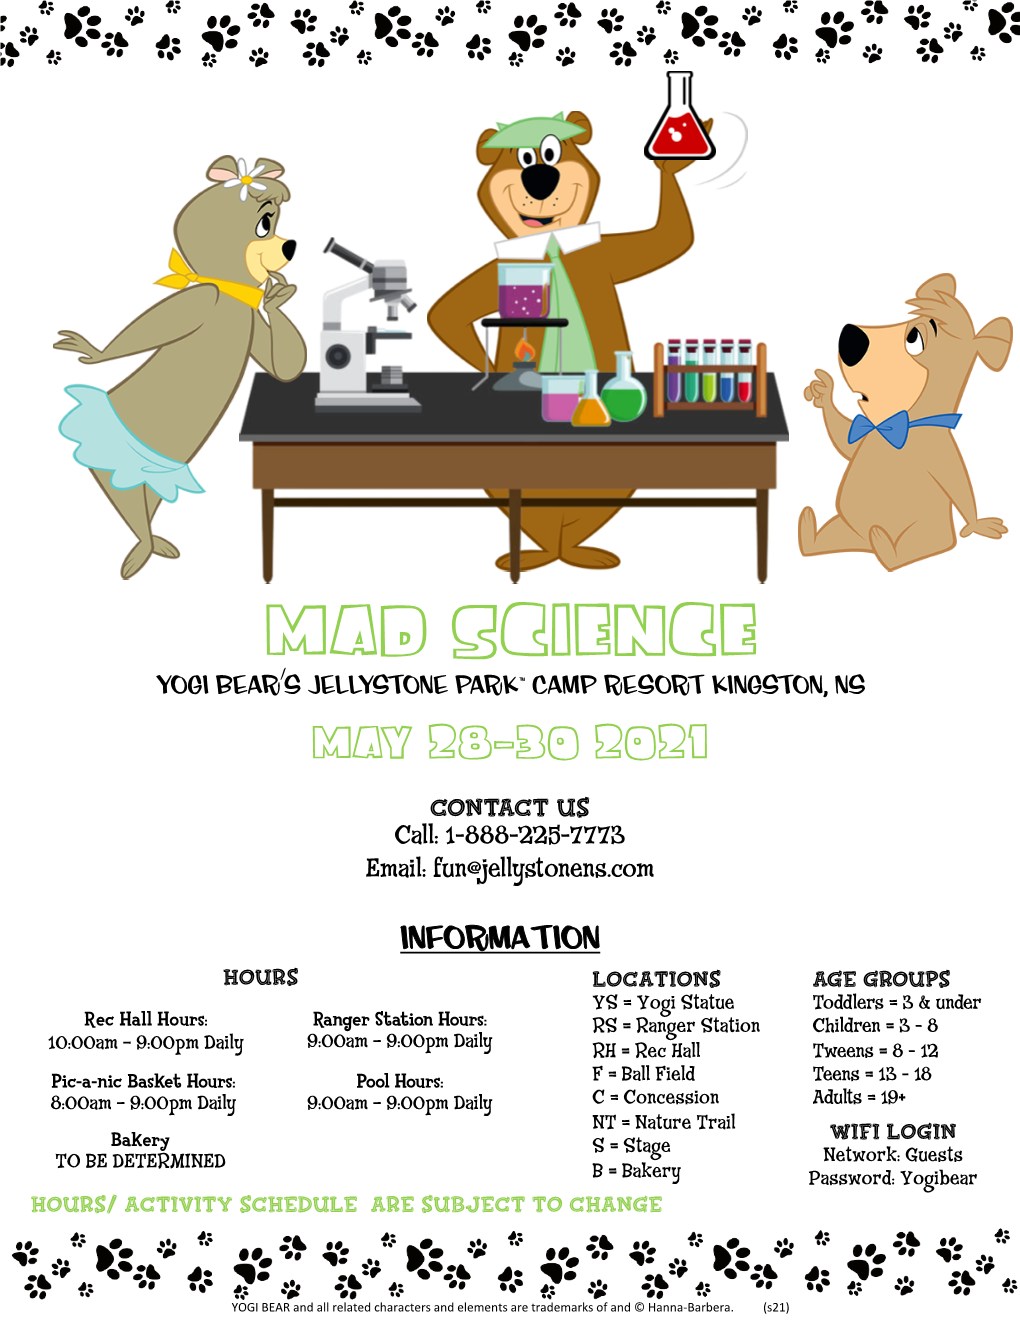 Mad Science Yogi Bear’S Jellystone Park™ Camp Resort Kingston, NS May 28-30 2021 Contact Us Call: 1-888-225-7773 Email: Fun@Jellystonens.Com